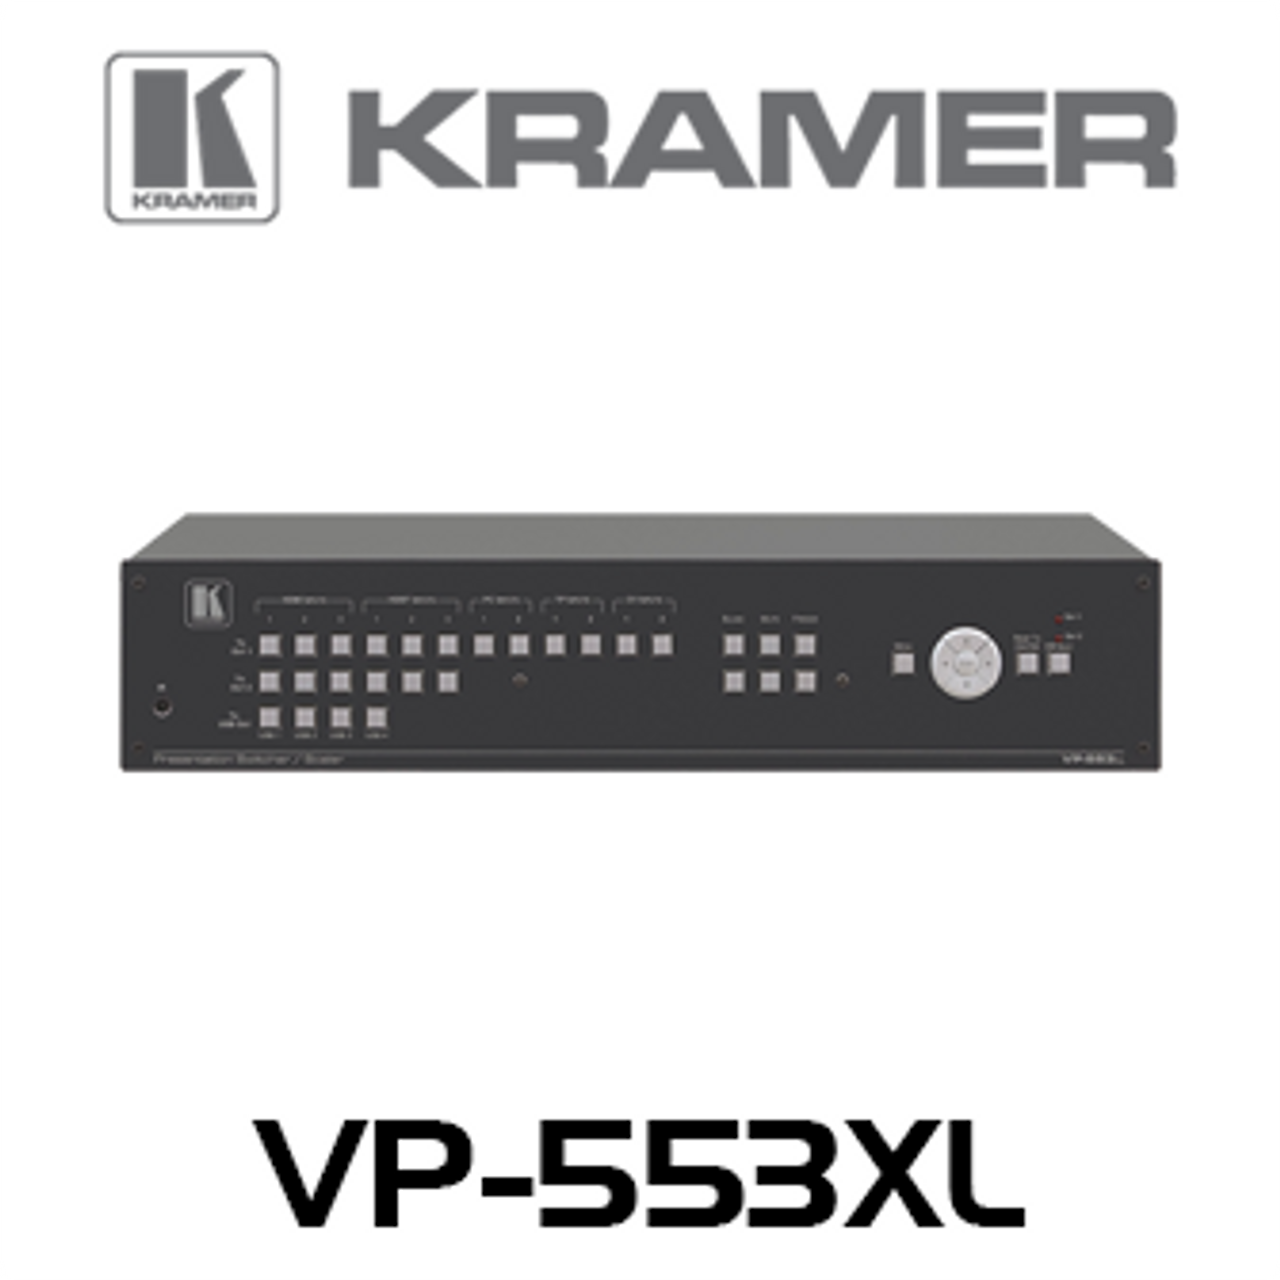 Kramer VP-553XL 6x2 Boardroom Presentation Switcher / Dual Scaler